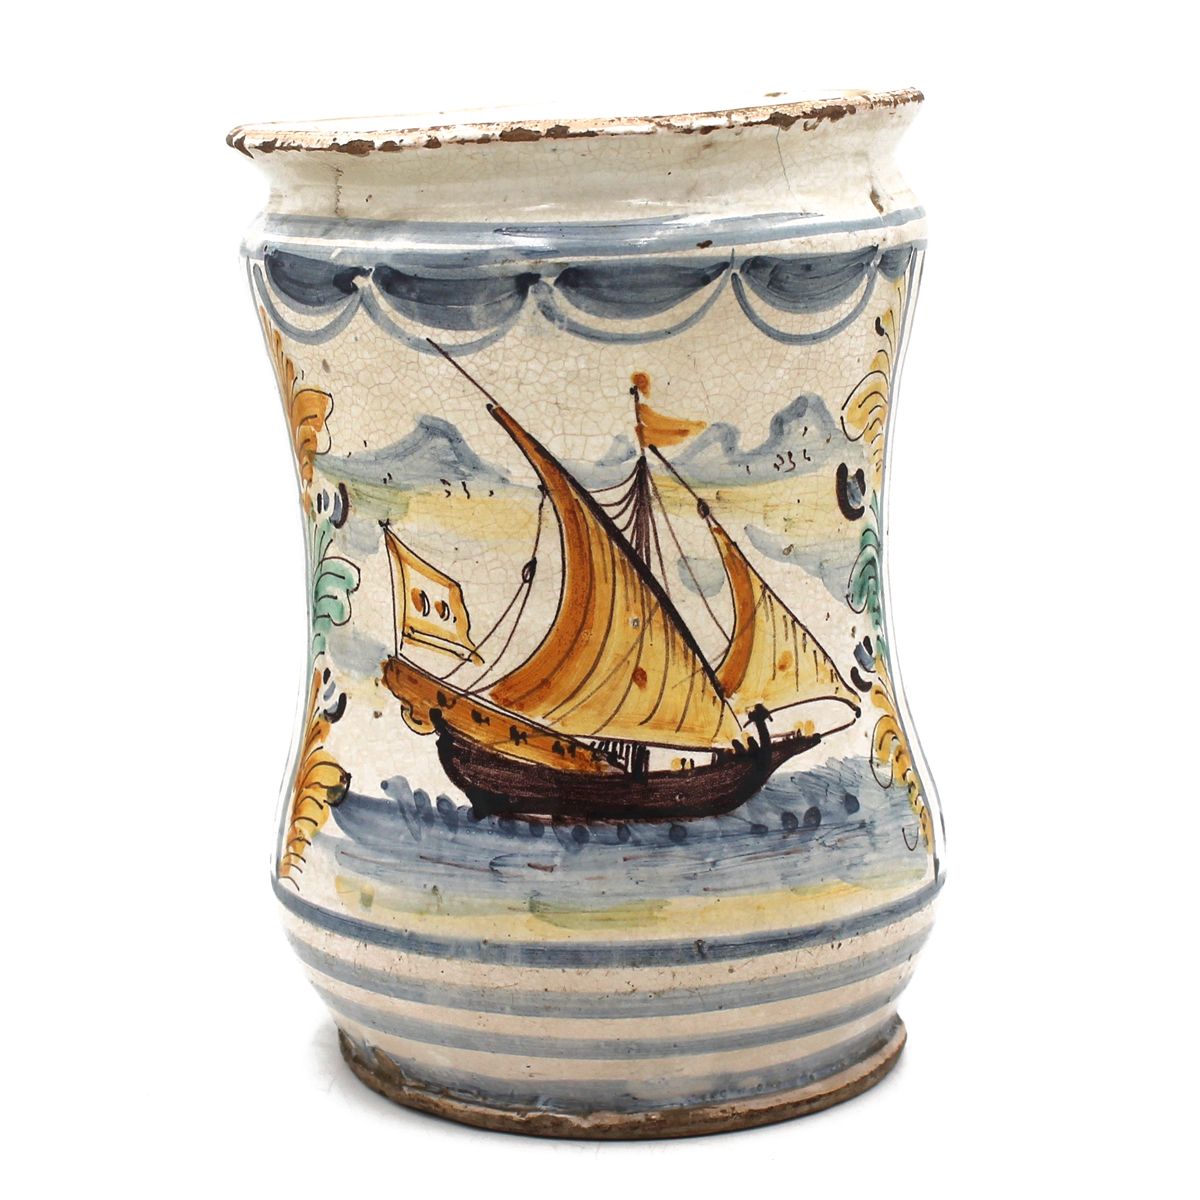 CILINDRO - CYLINDER 古老的马约里卡，在奶油色的地面上装饰着风景和帆船。意大利南部。19世纪初。Cm H 25
古代马乔利卡，在奶油色背景上装&hellip;